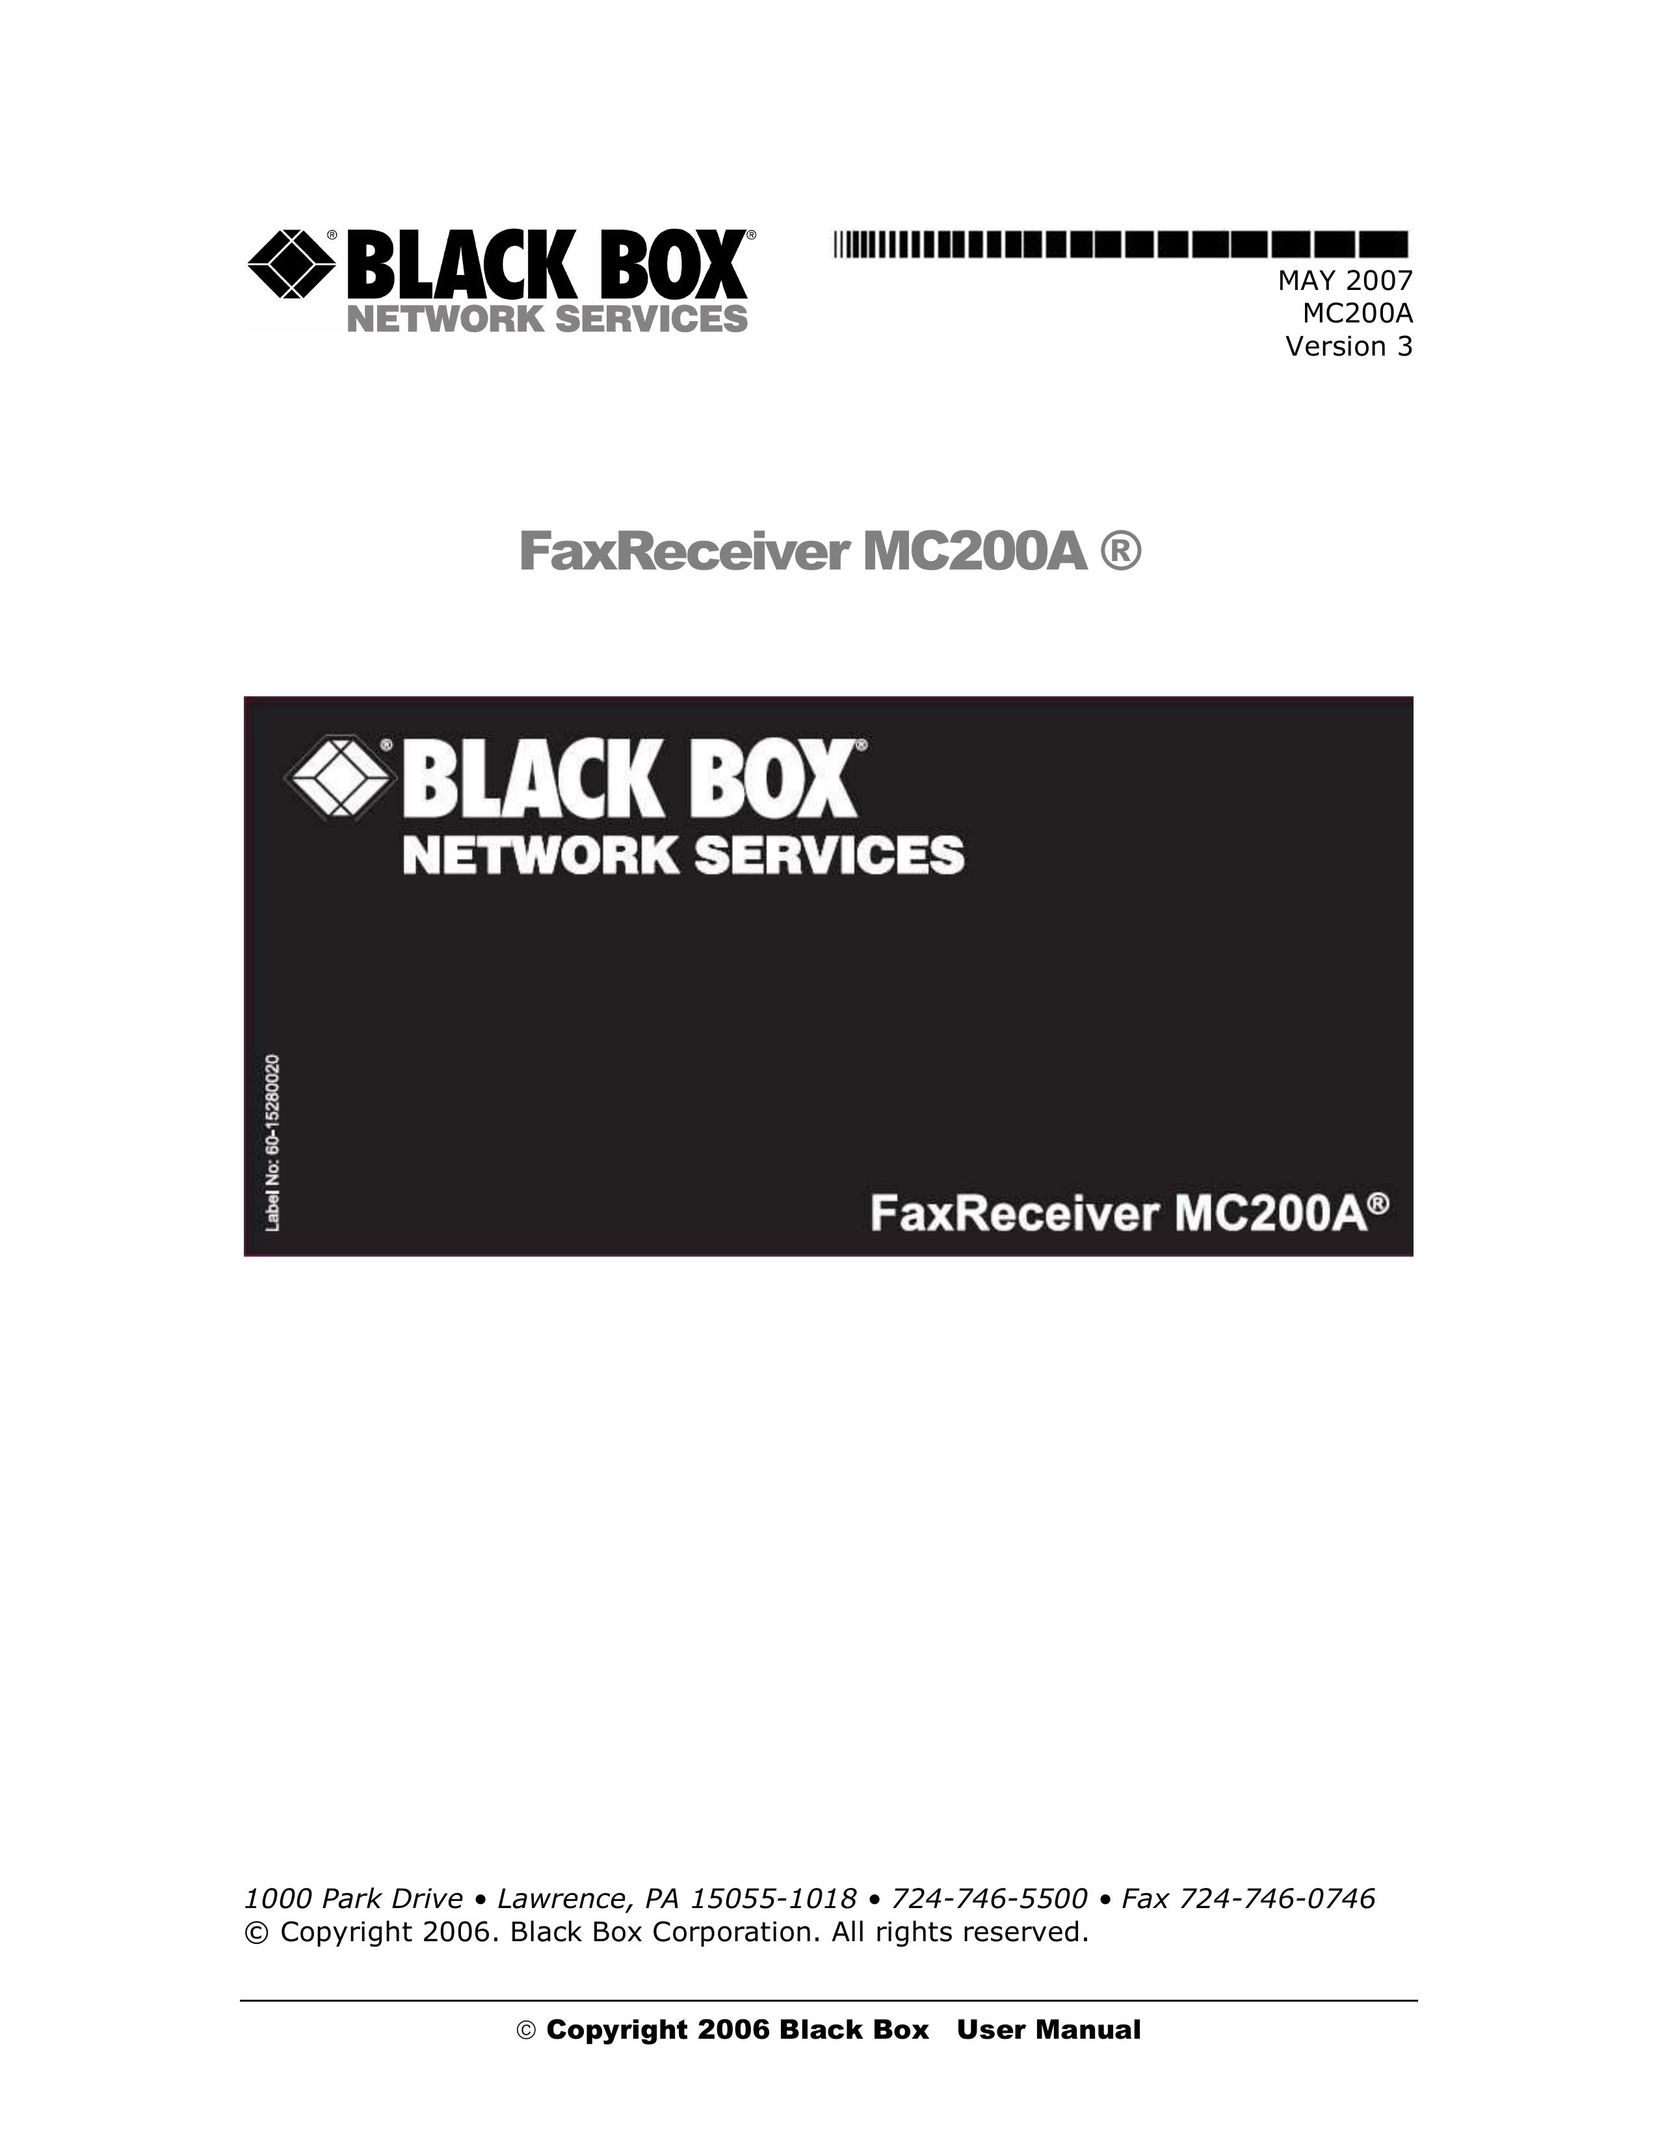 Black Box Black Box Network Services FaxReceiver Fax Machine User Manual